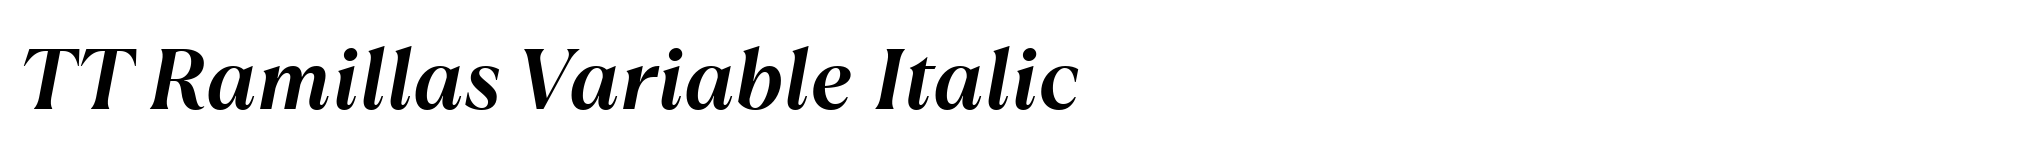 TT Ramillas Variable Italic image